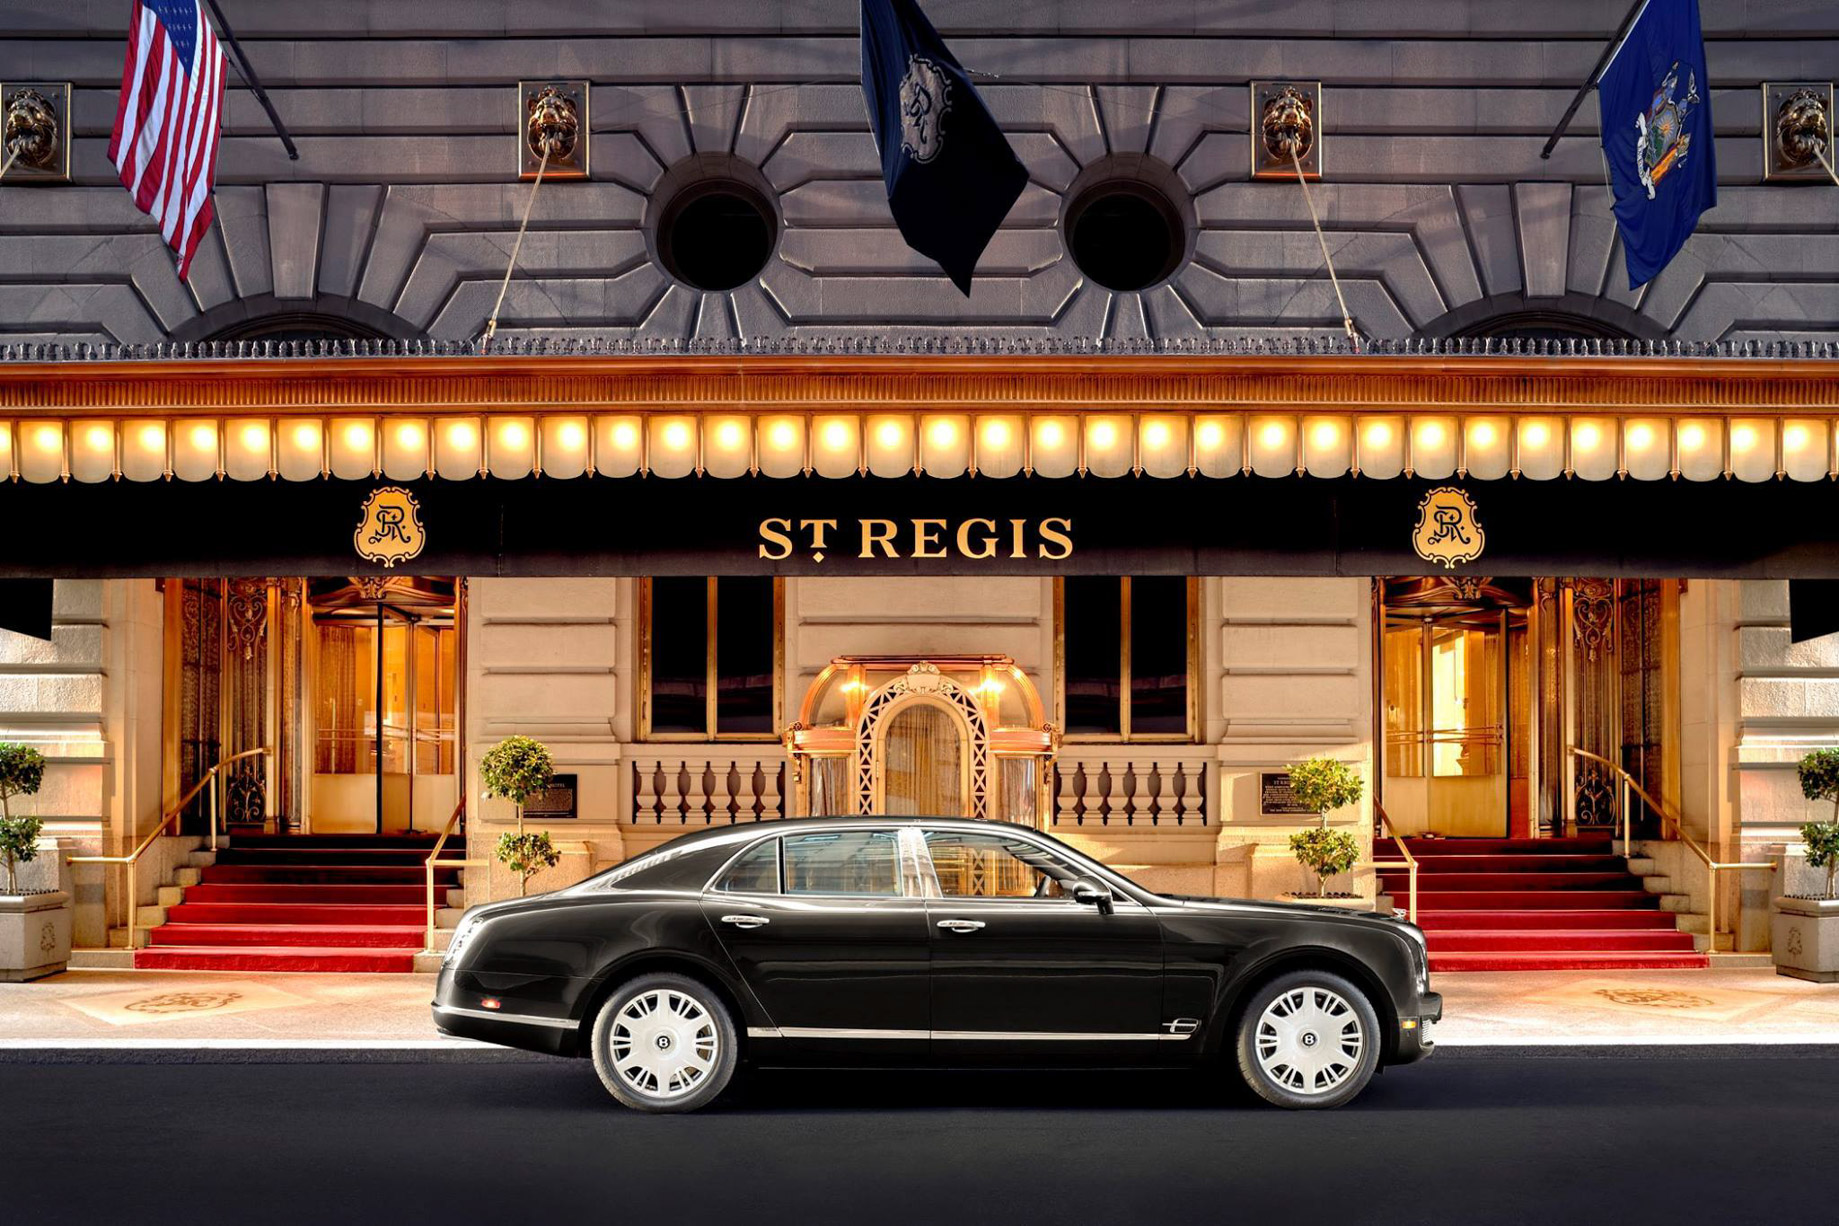 The St. Regis New York Hotel - New York, NY, USA - Evening Exterior Front Entrance